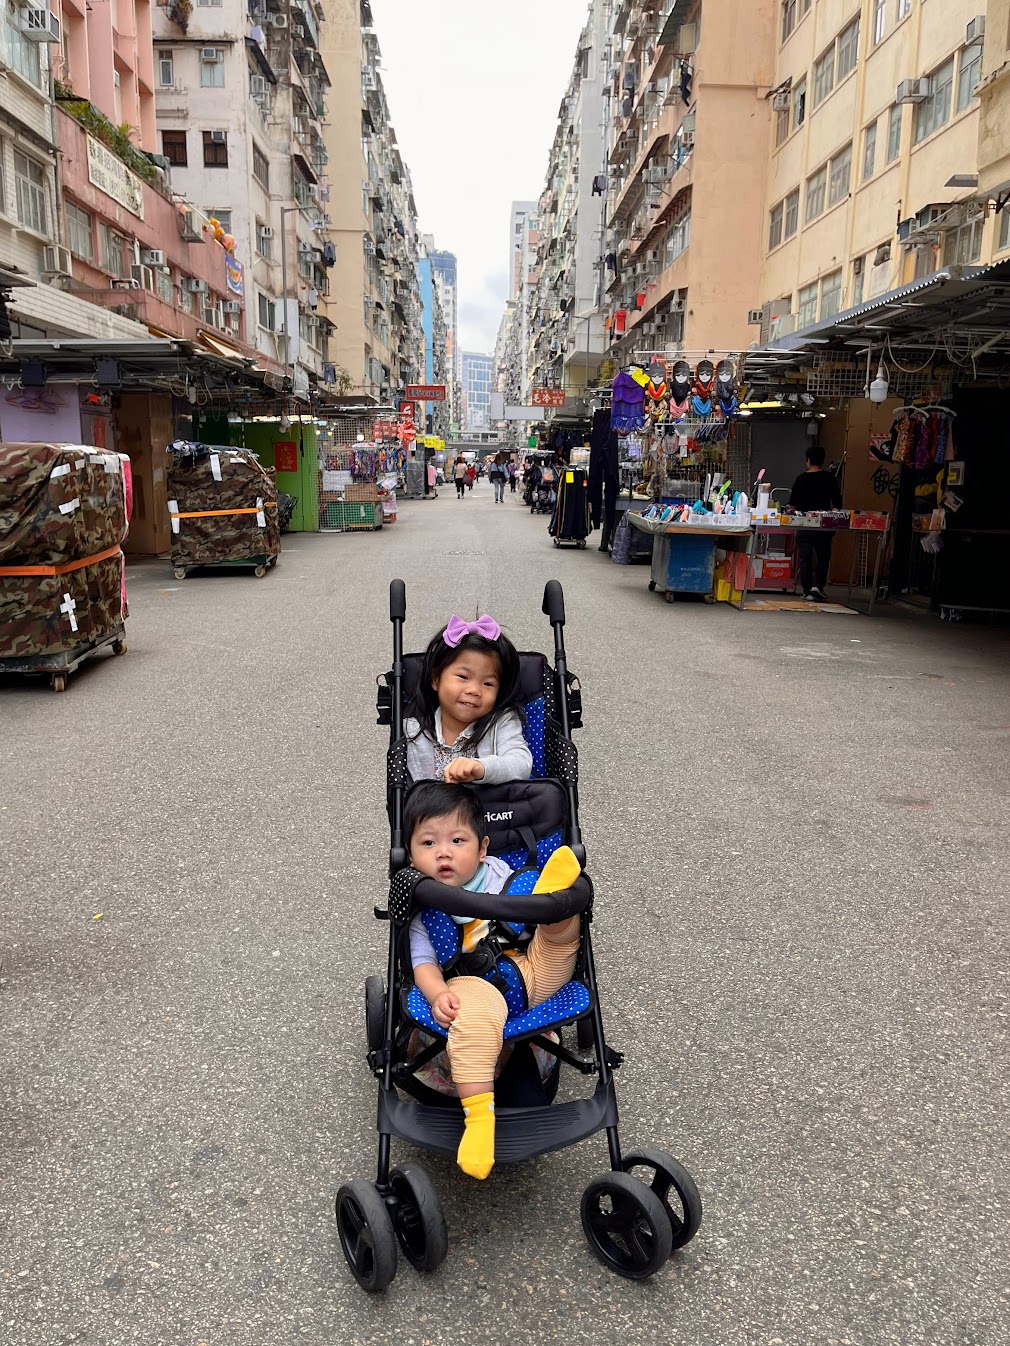 hong kong trip review blog